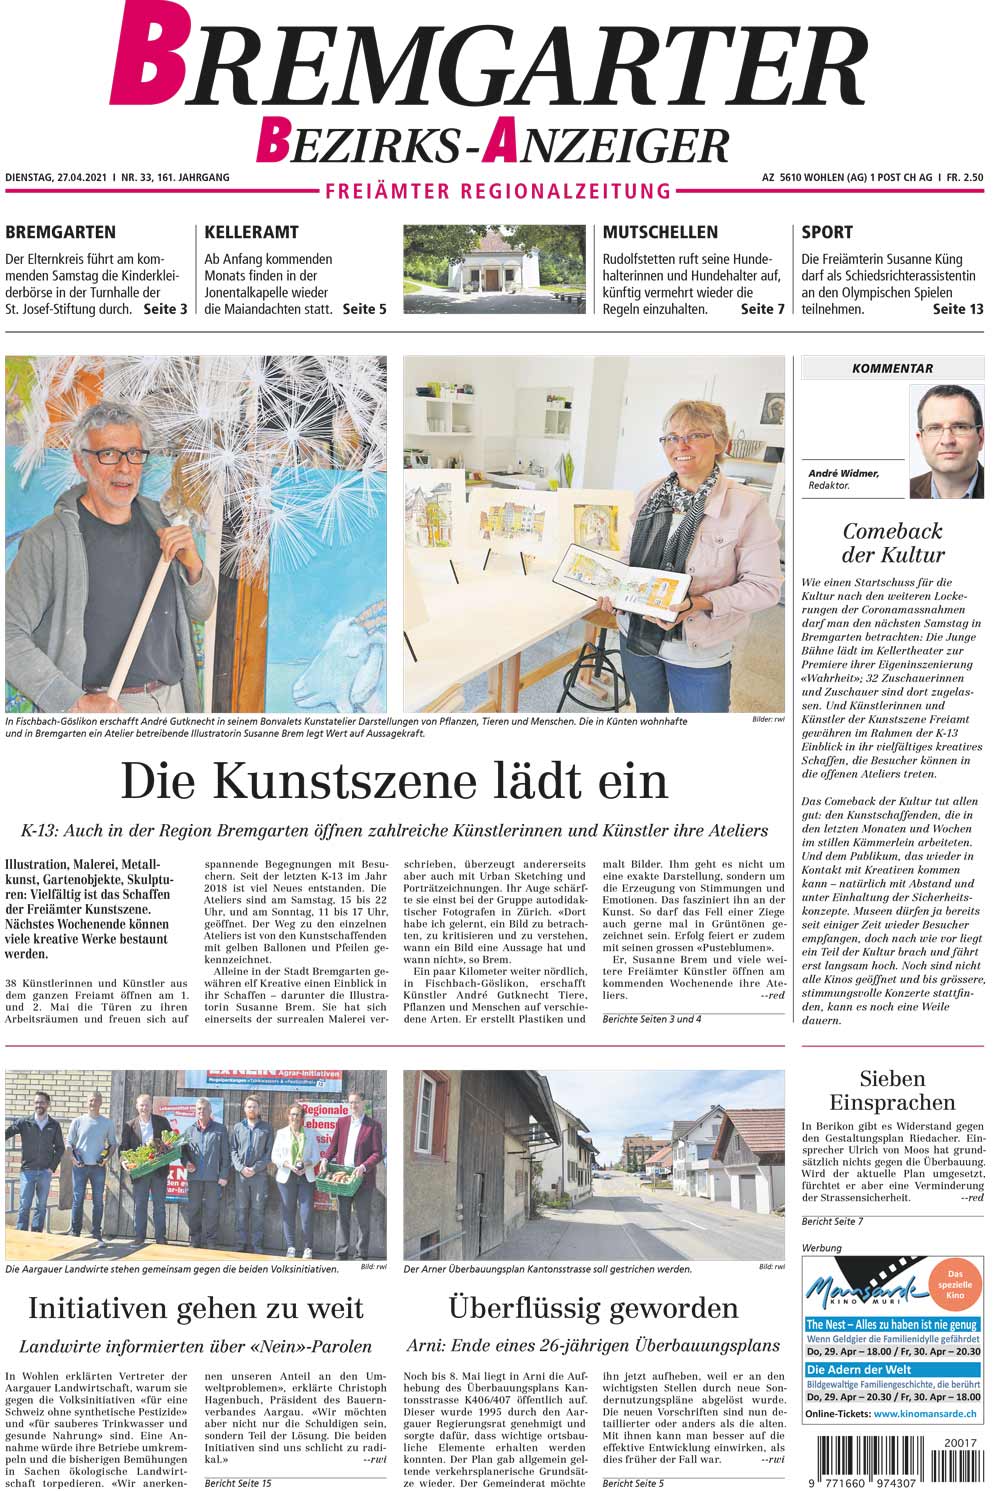 K-13, Kunstszene Freiamt, Artikel im Bremgarter Bezirksanzeiger offene Ateliers Susanne Brem